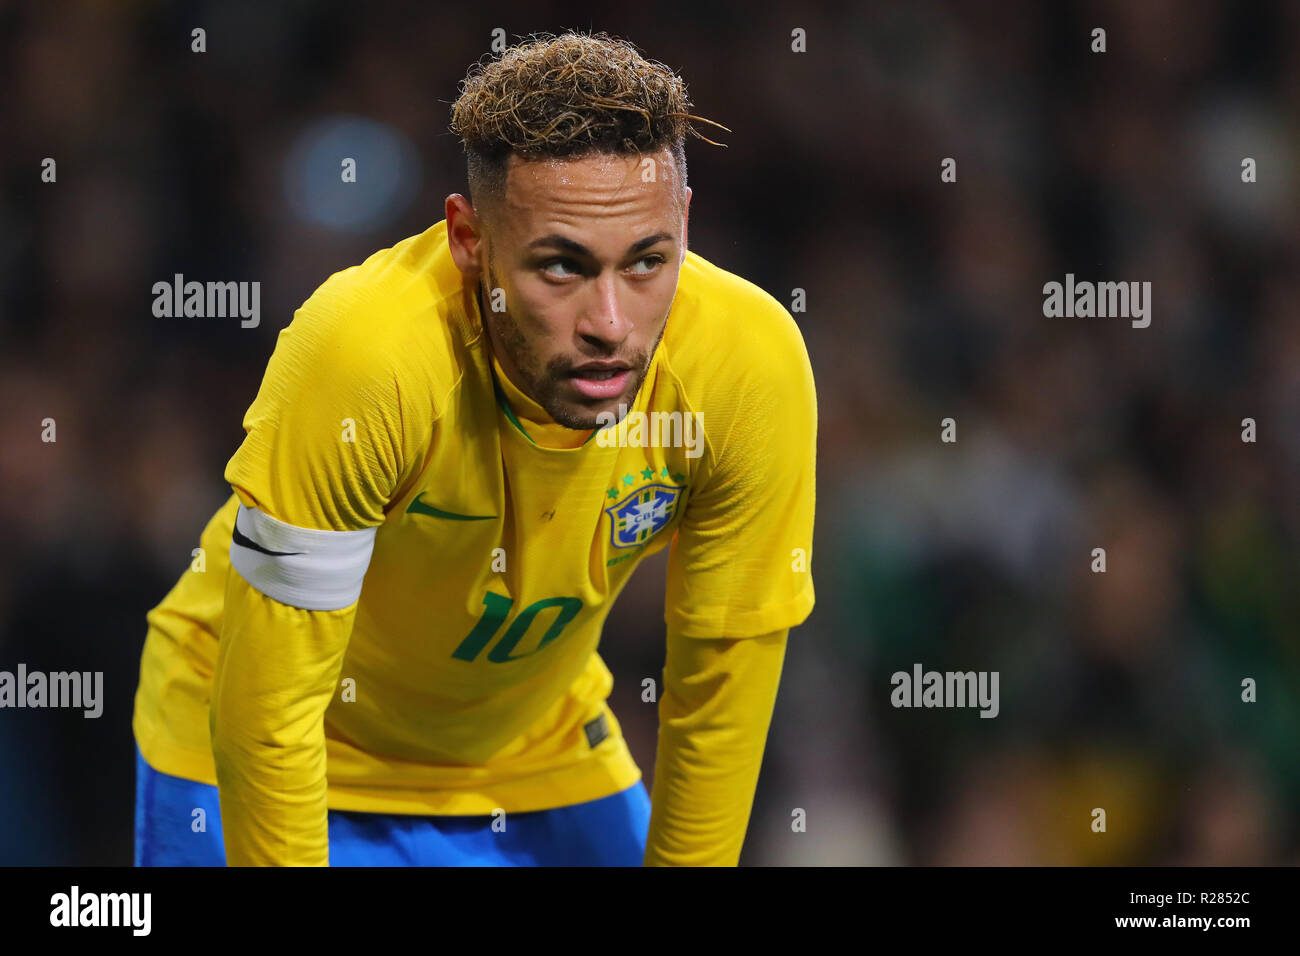 London, UK. 16th November 2018. Neymar of Brazil - Brazil v Uruguay, International Friendly, Emirates Stadium, London (Holloway) - 16th November 2018 Credit: Richard Calver/Alamy Live News Stock Photo